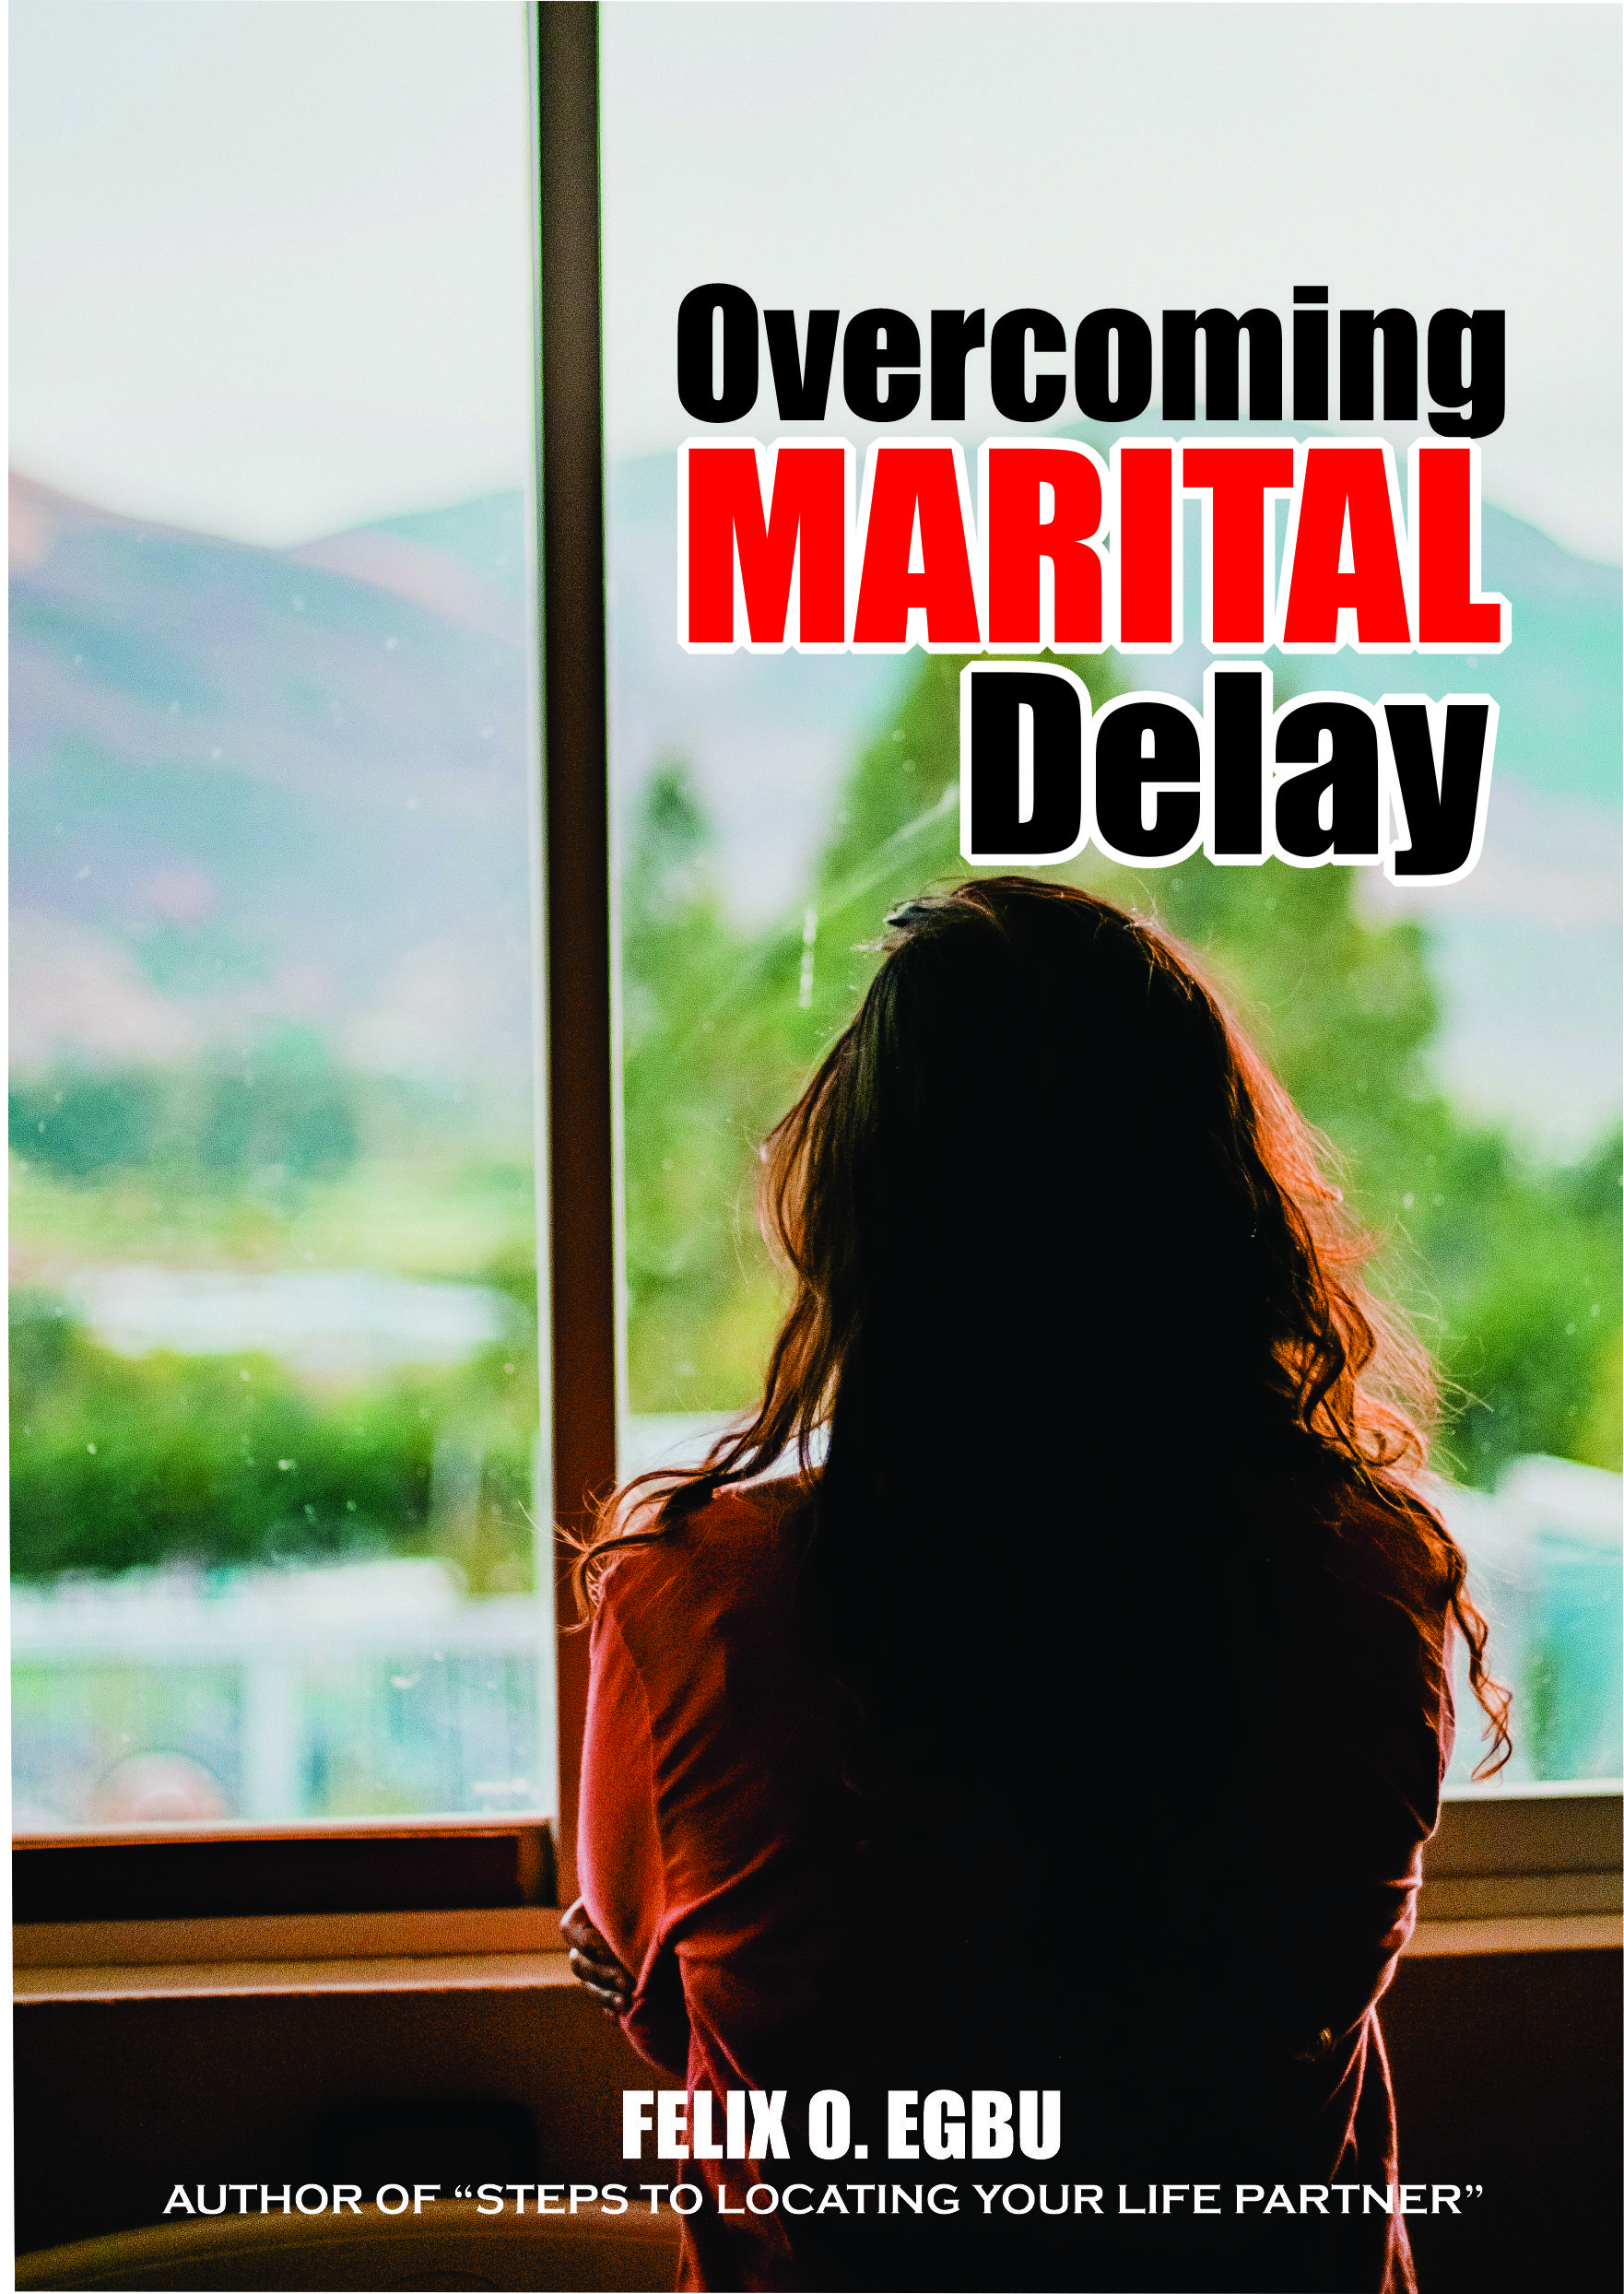 Overcoming-Marital-Delay